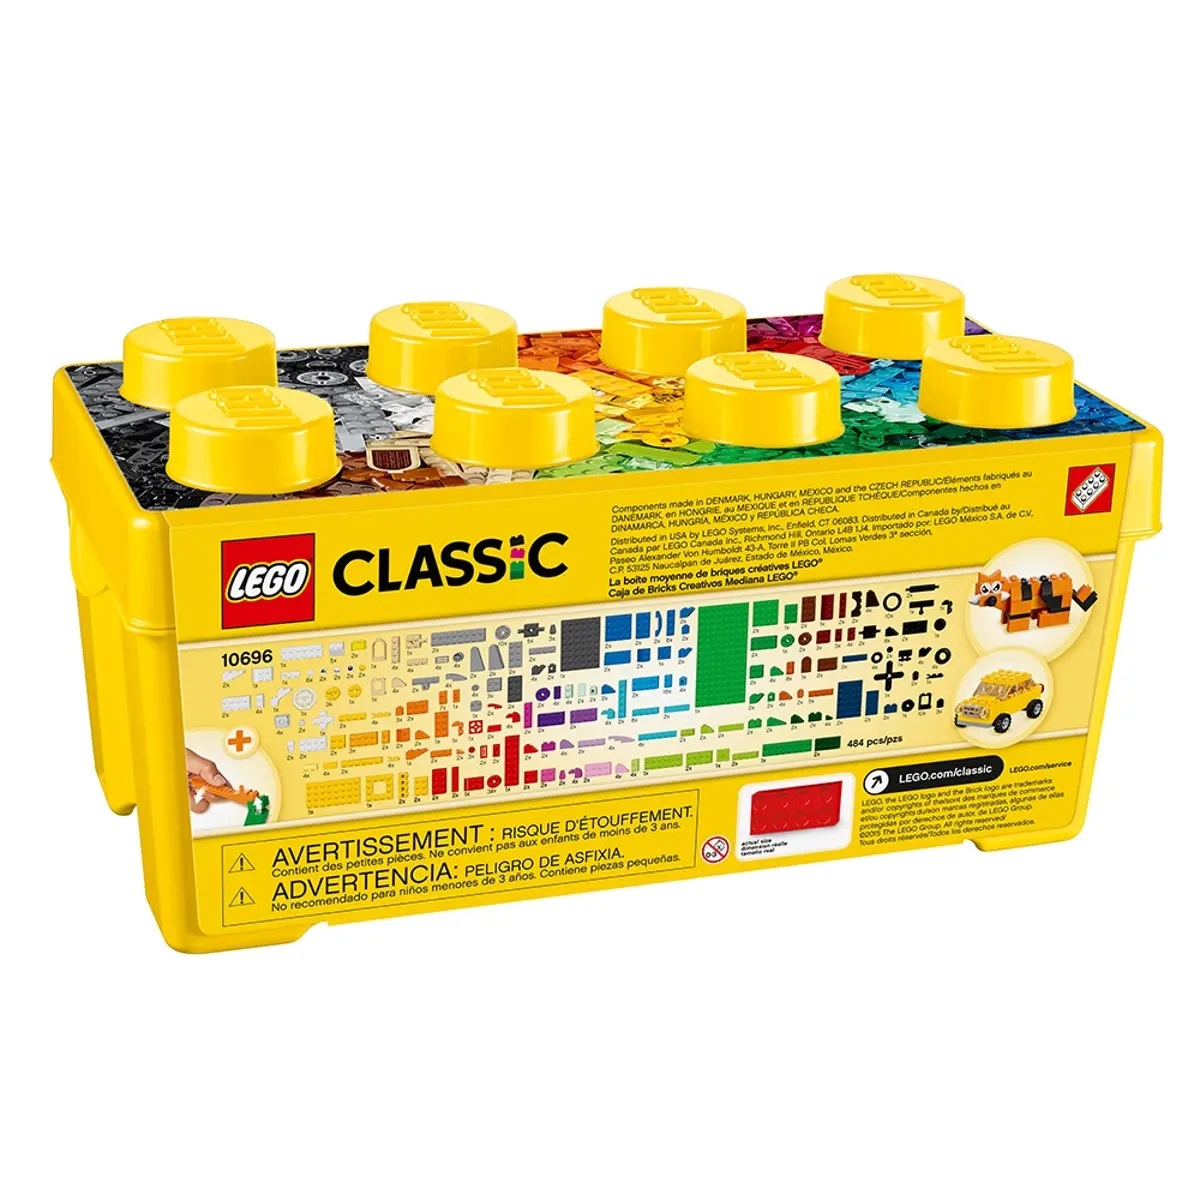 Lego Caja Bloque Azul By Lego - Limited Edition